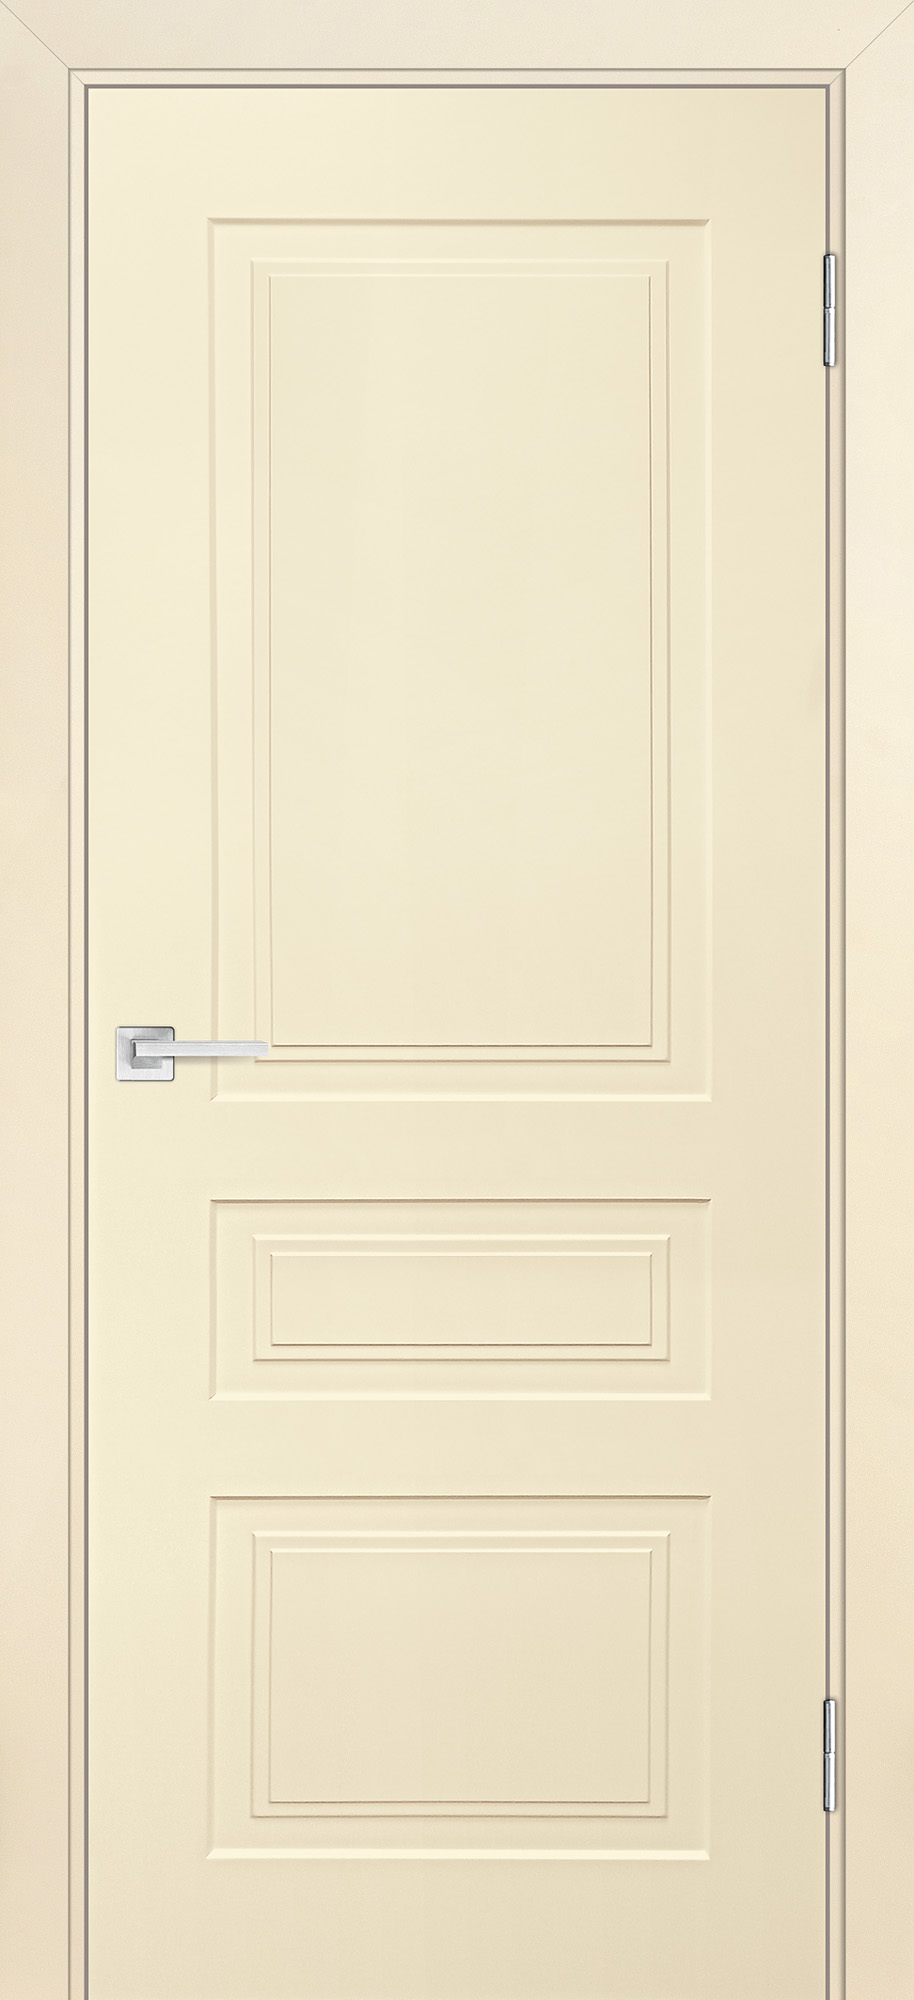 Двери крашеные (Эмаль) ТЕКОНА Смальта-Лайн 05 глухое Айвори ral 1013 размер 200 х 60 см. артикул F0000093249